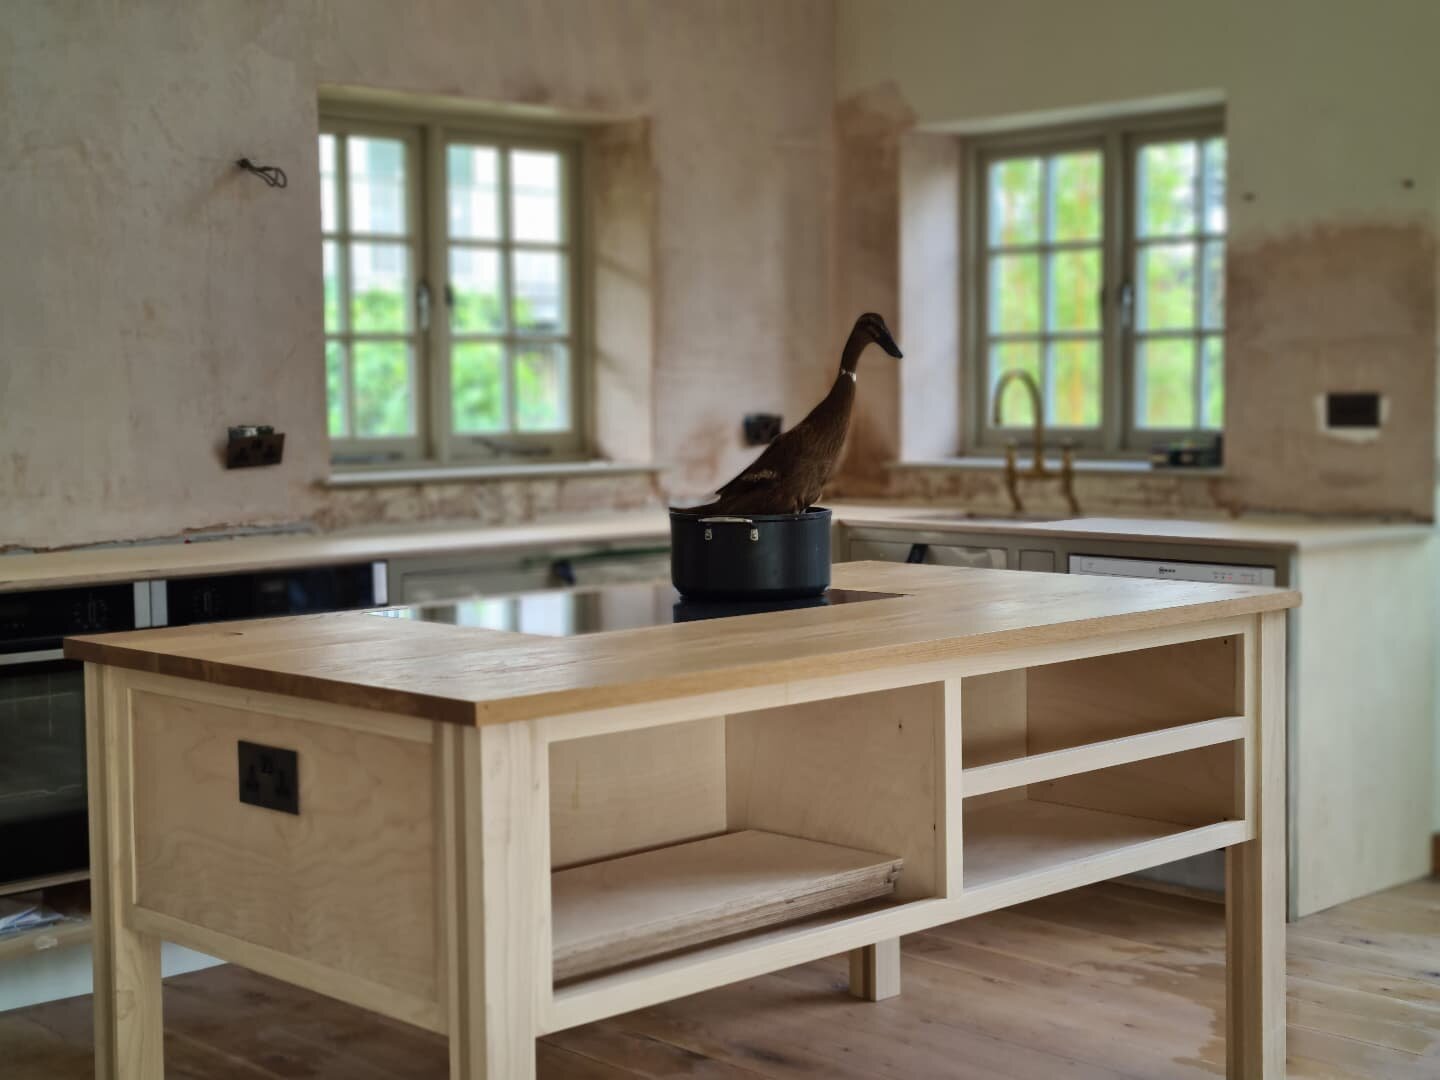 Duck in pot. 

#carpentry #totnes #kitchendesign #southhams #devonbusiness #bespokefurniture